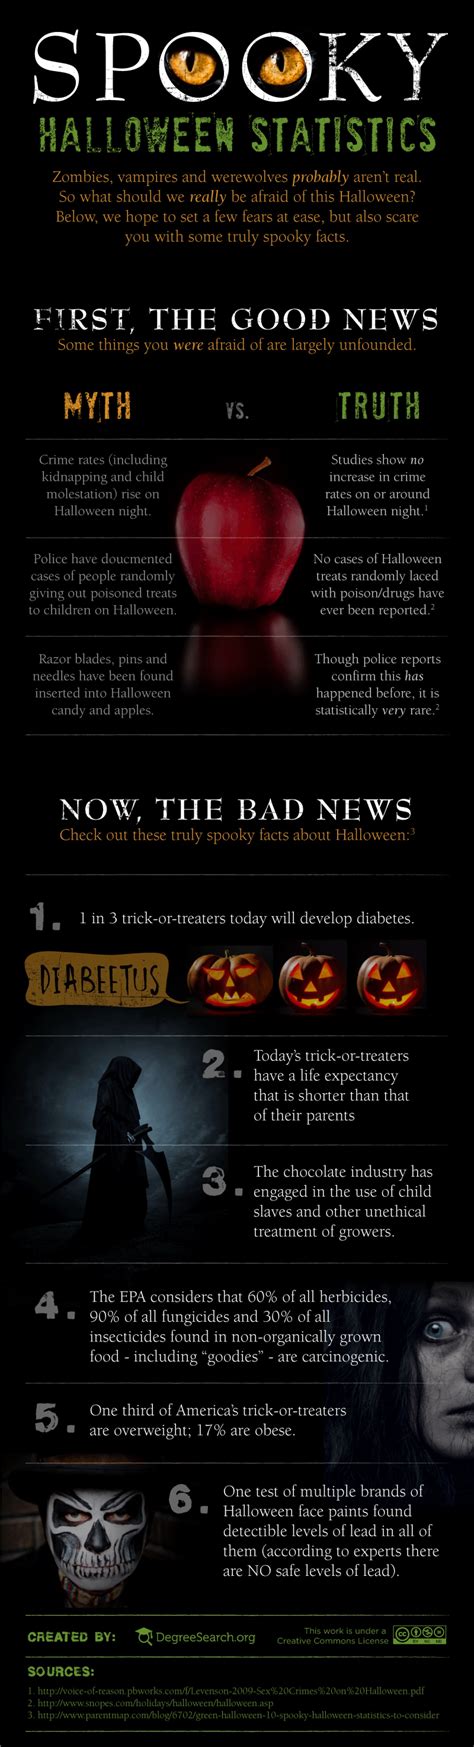 spooky halloween statistics infographic